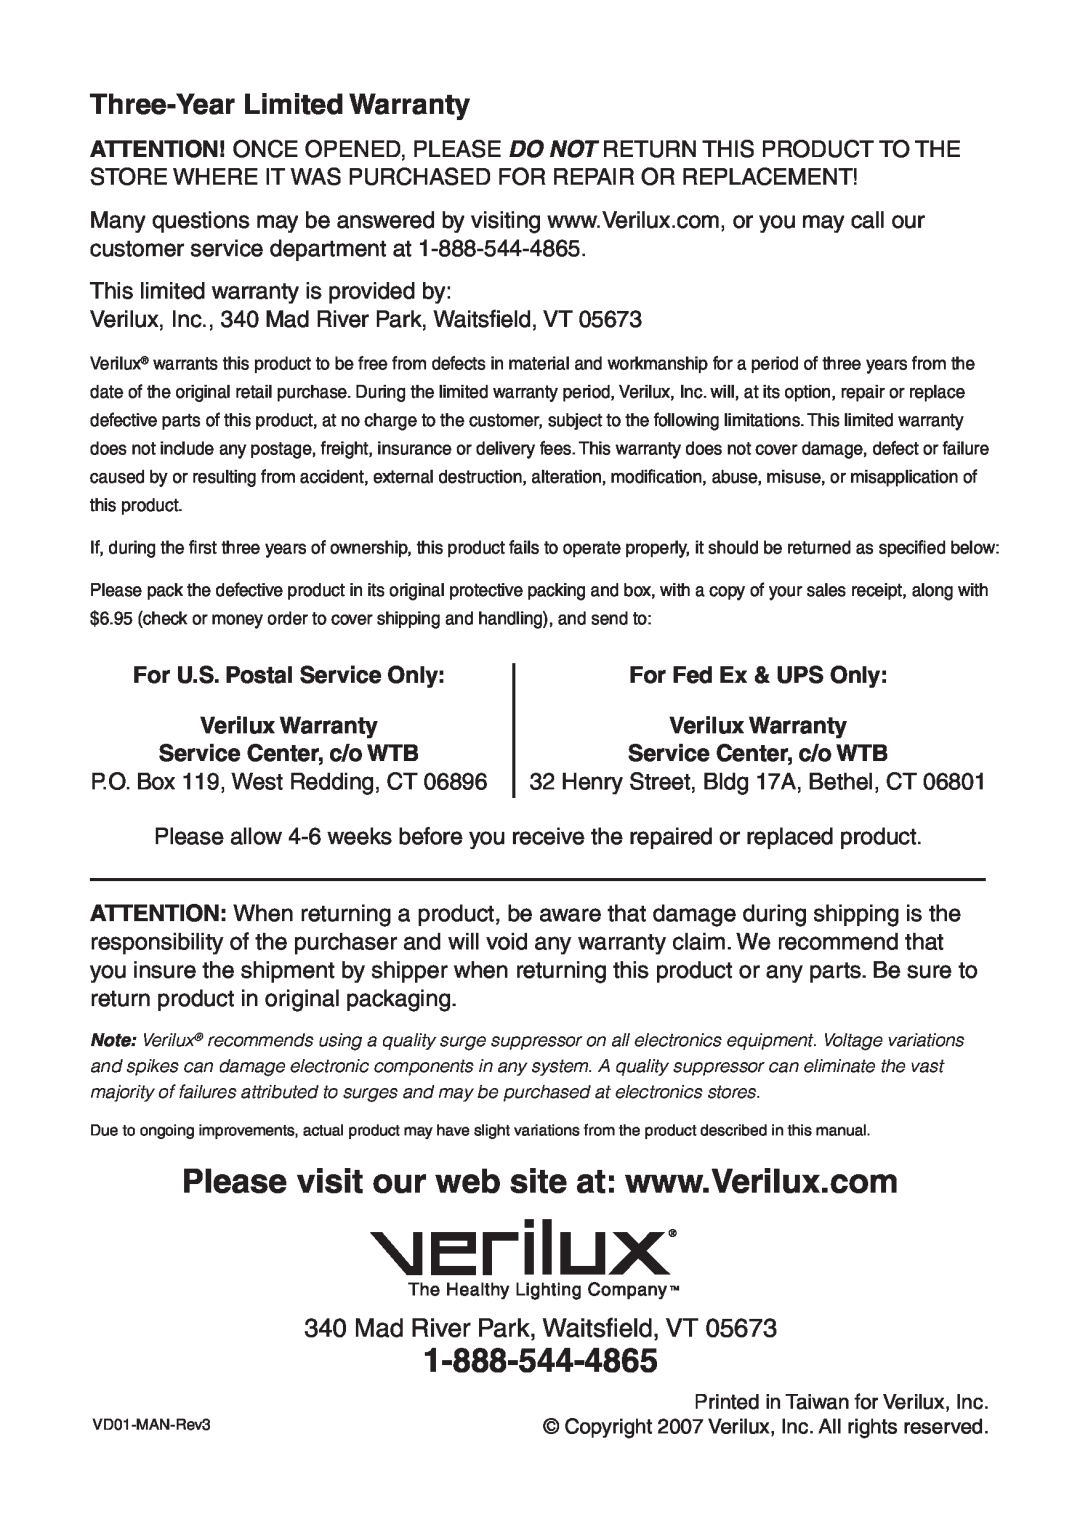 Verilux VD01 manual Three-YearLimited Warranty, For U.S. Postal Service Only Verilux Warranty, Service Center, c/o WTB 